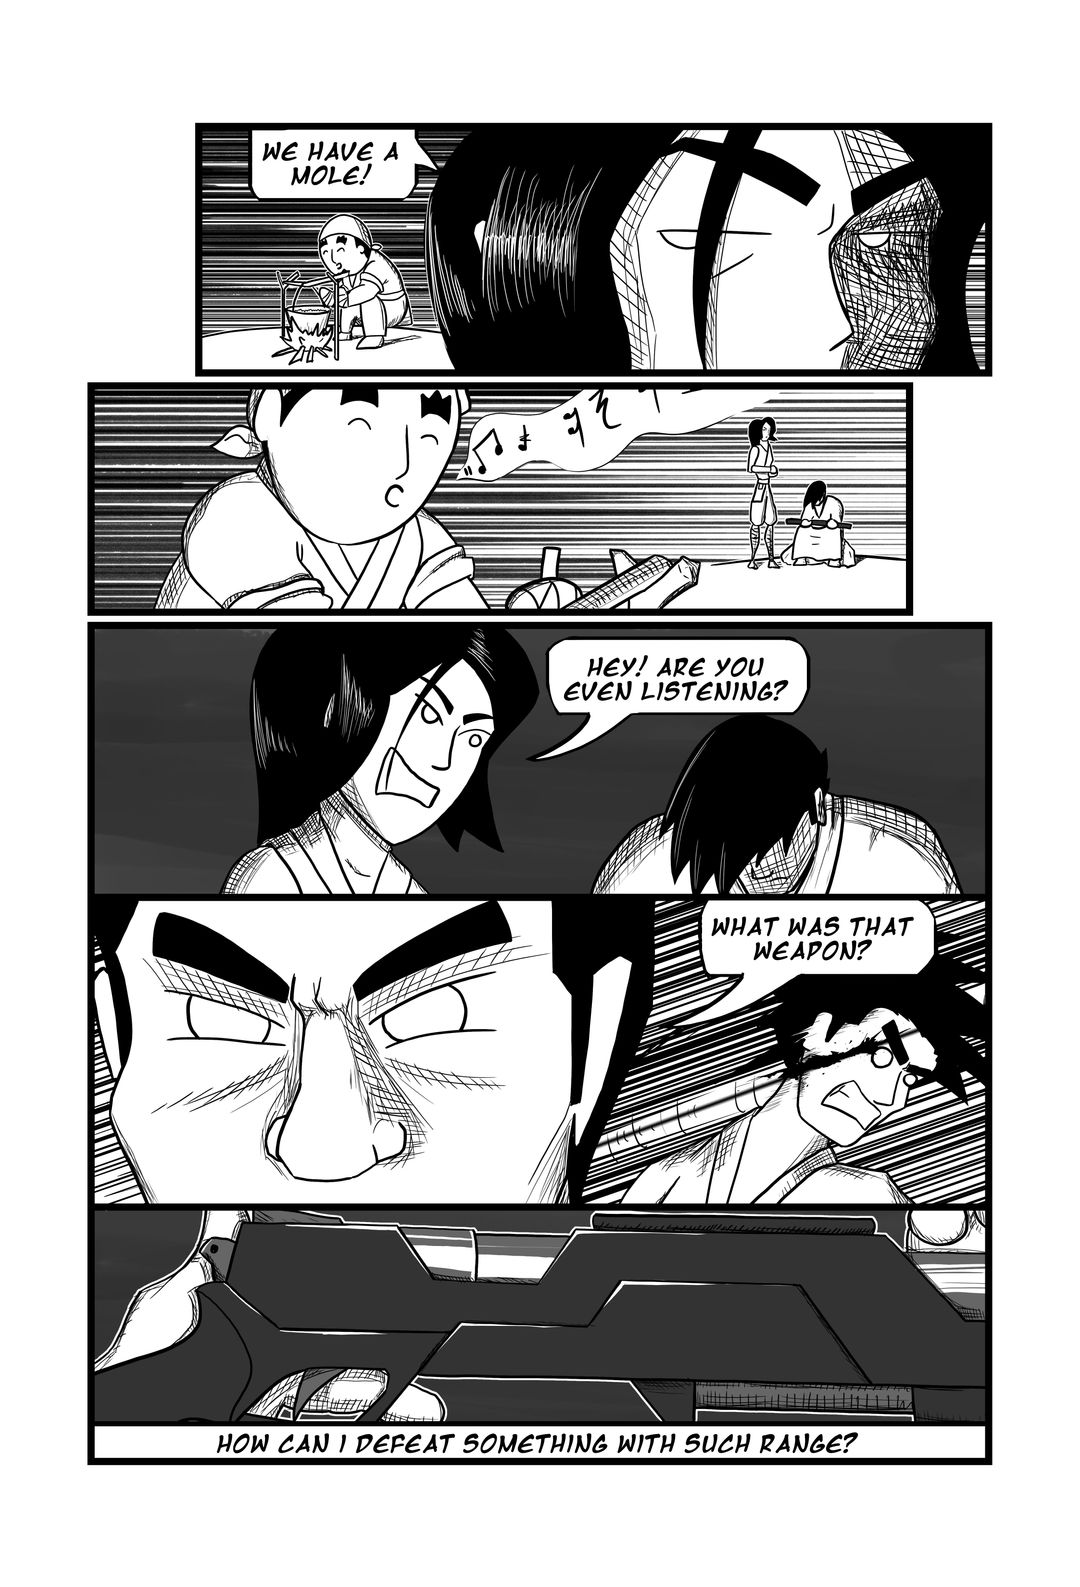 Shotgun Samurai 13 panel 2